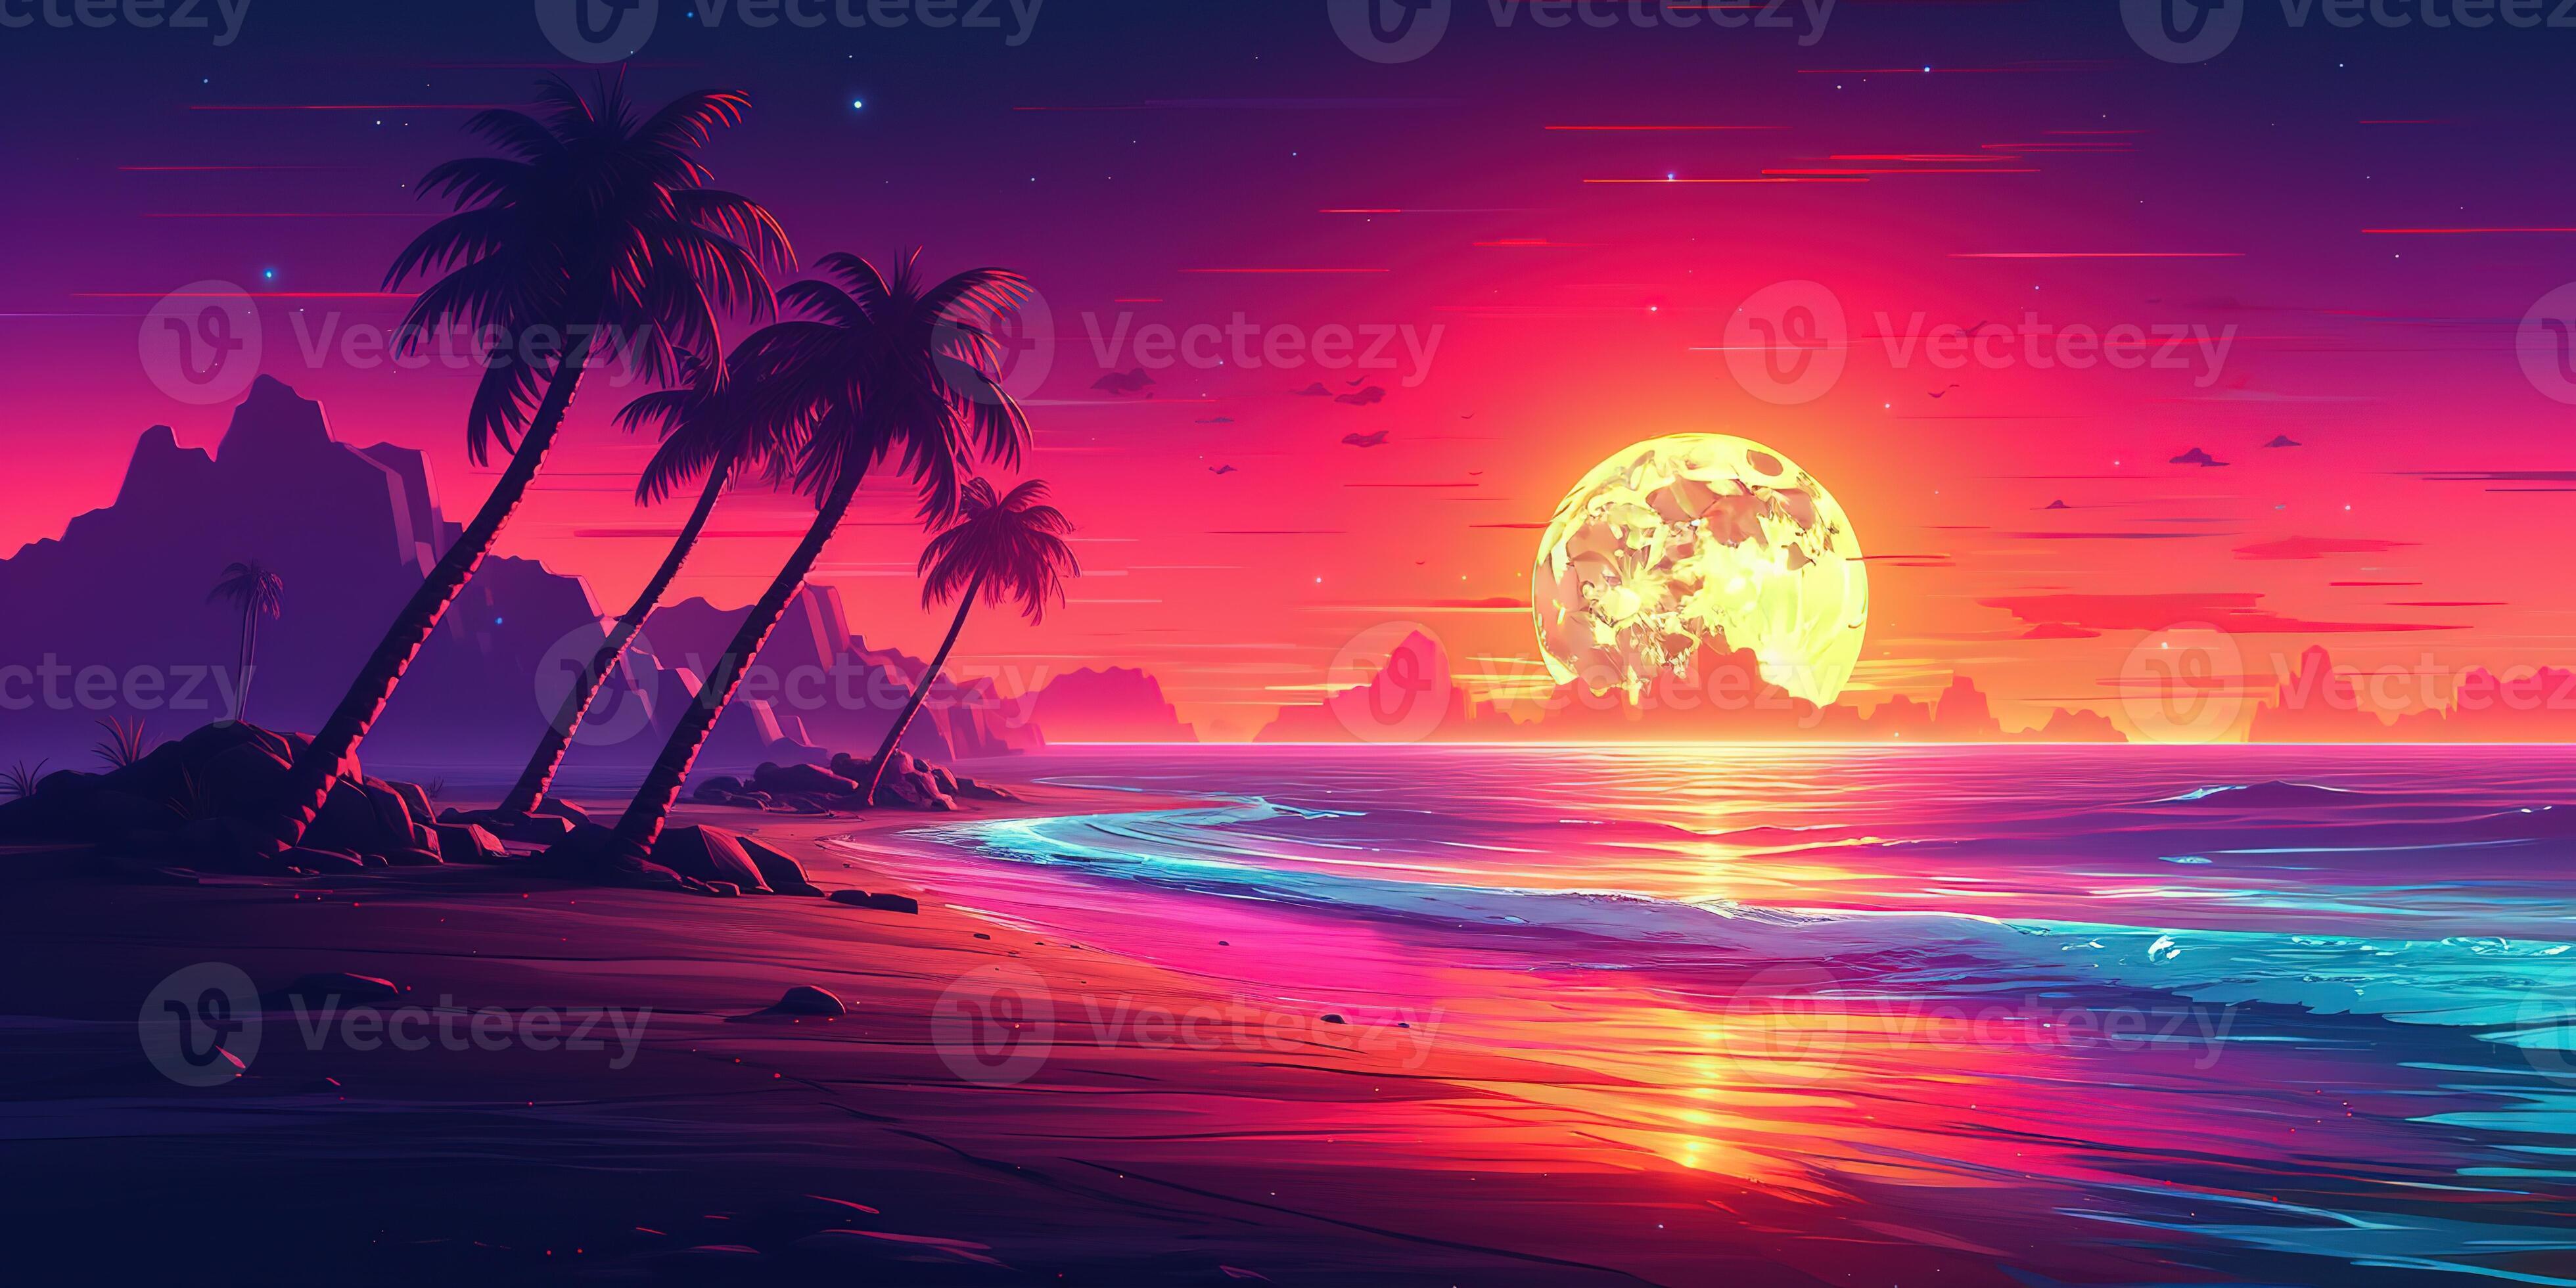 Beach Aesthetic Desktop Wallpapers HD Free Download  PixelsTalkNet